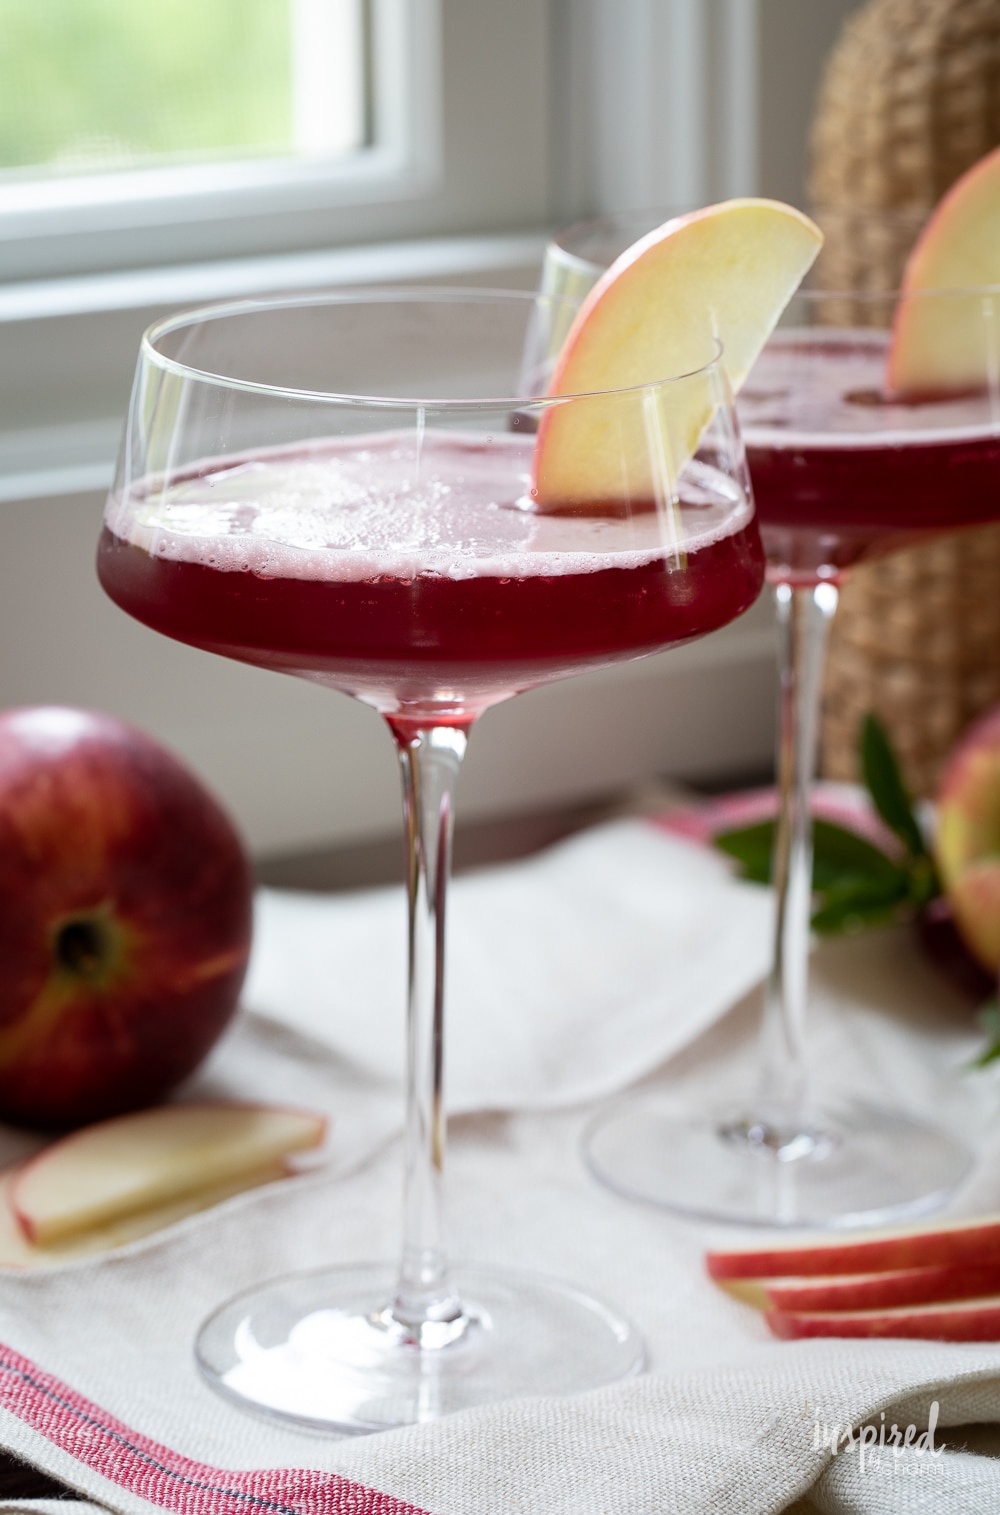 washington apple cocktail in martini glasses with apple slice garnish.